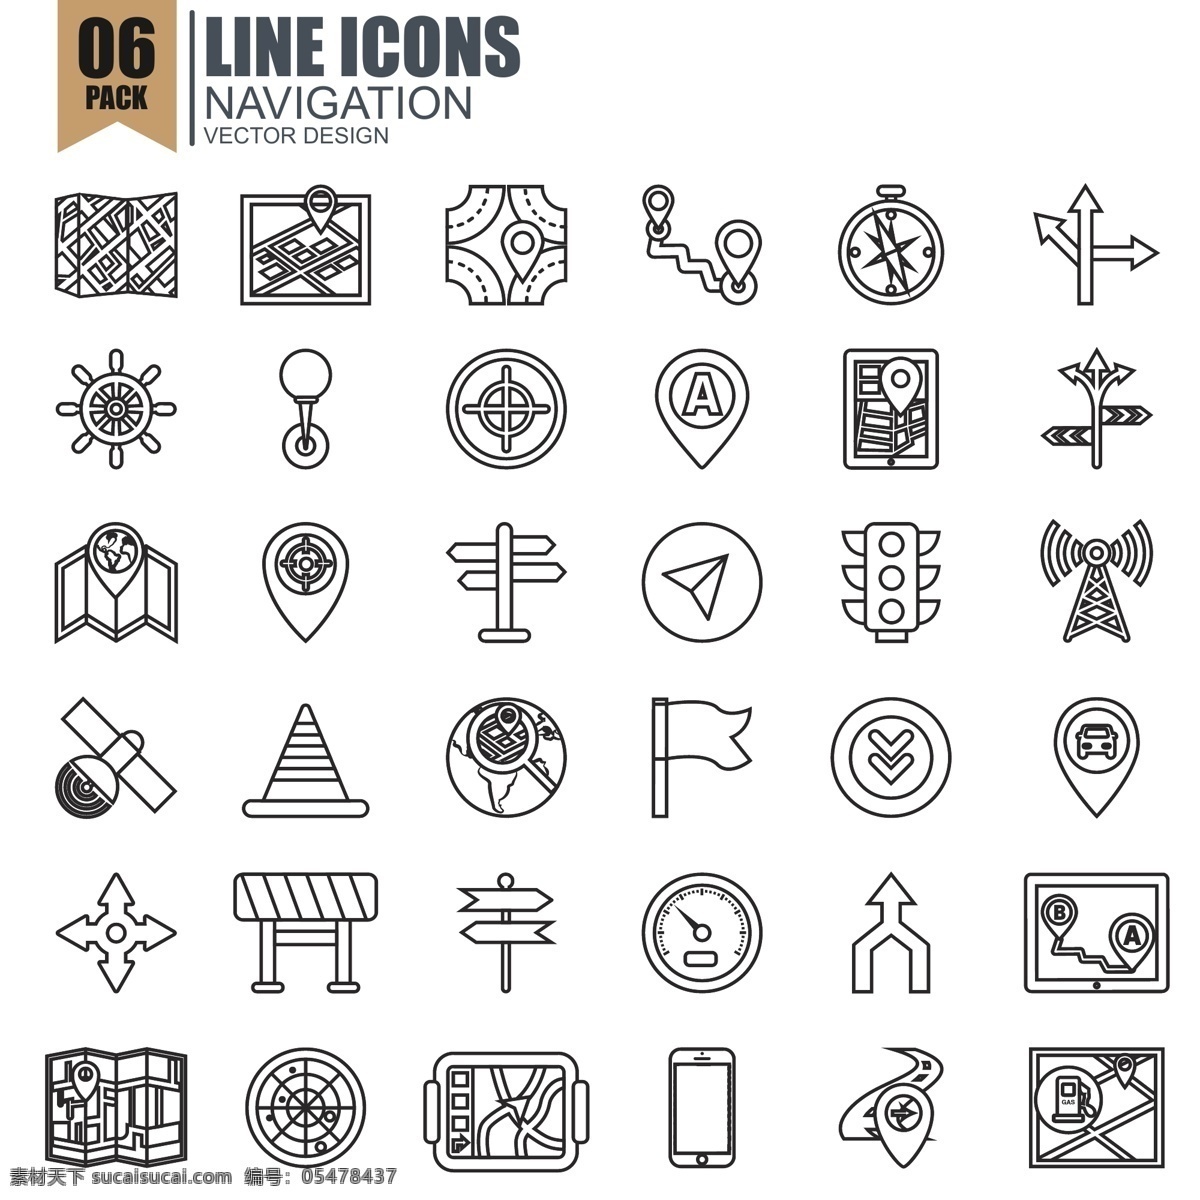 款 灰色 校园 图标 icon 彩色icon icon图标 旅行图标 卡通icon 办公icon icon下载 旅行icon 校园icon 夏季icon 商业